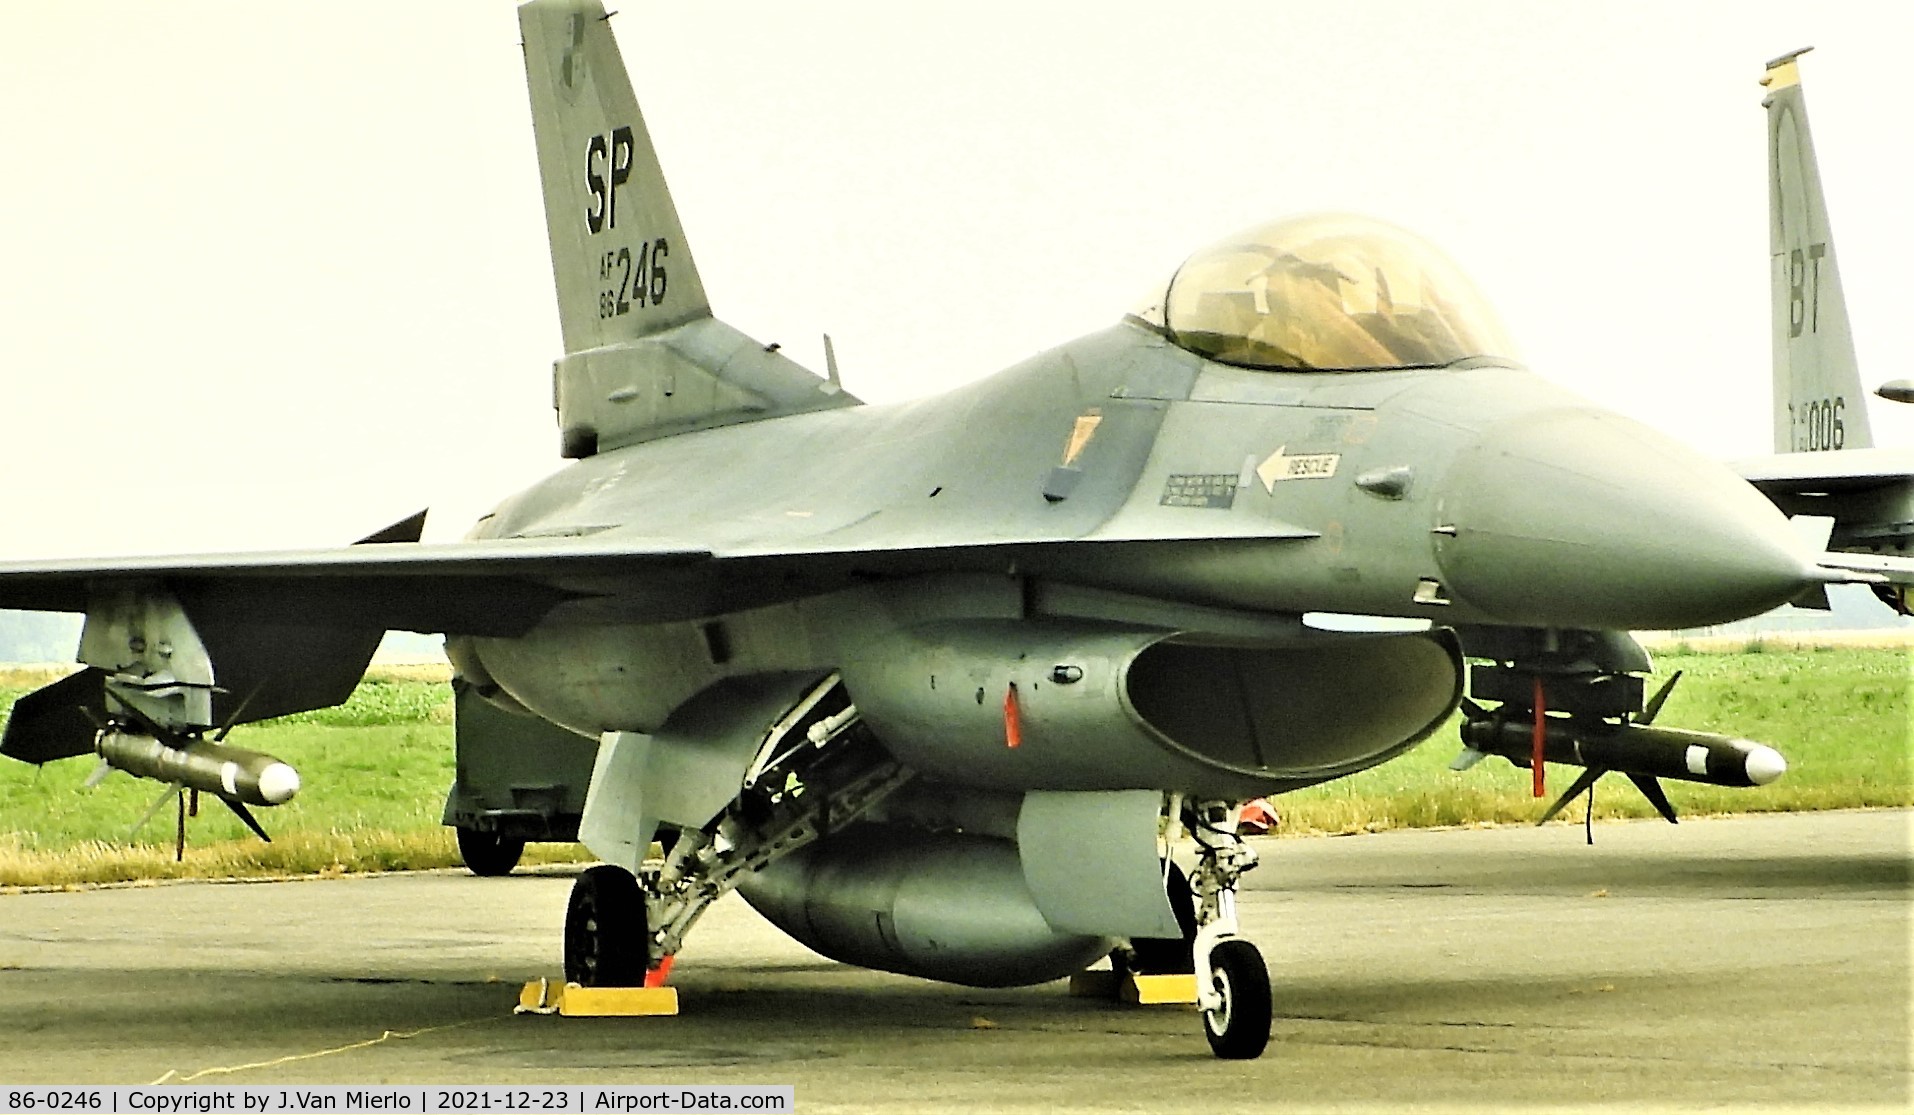 86-0246, 1986 General Dynamics F-16C Fighting Falcon C/N 5C-352, Slide scan